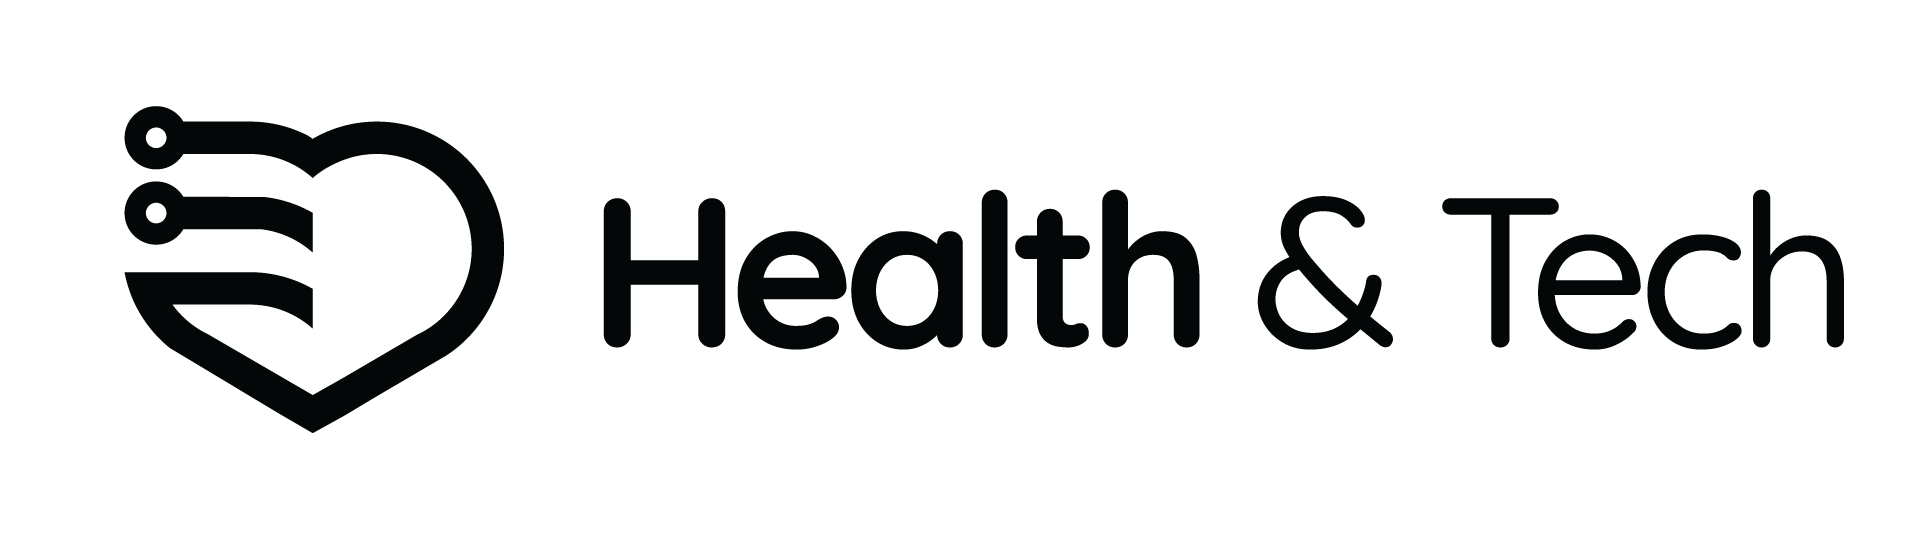 Health & Tech